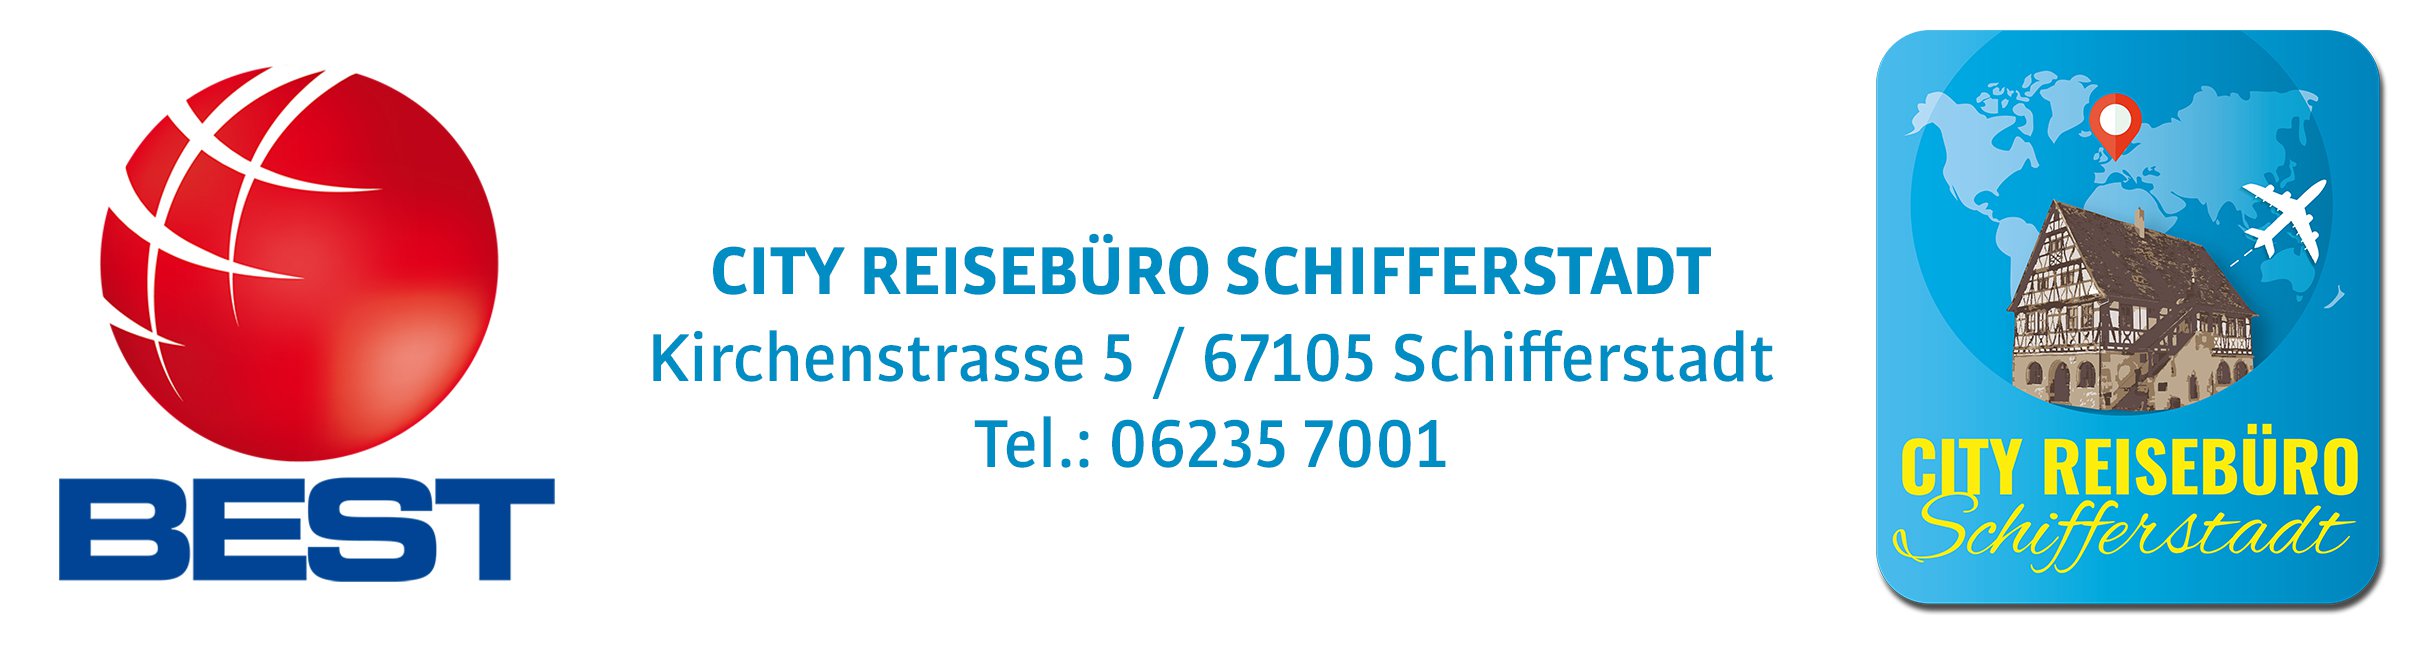 City Reisebüro Schifferstadt